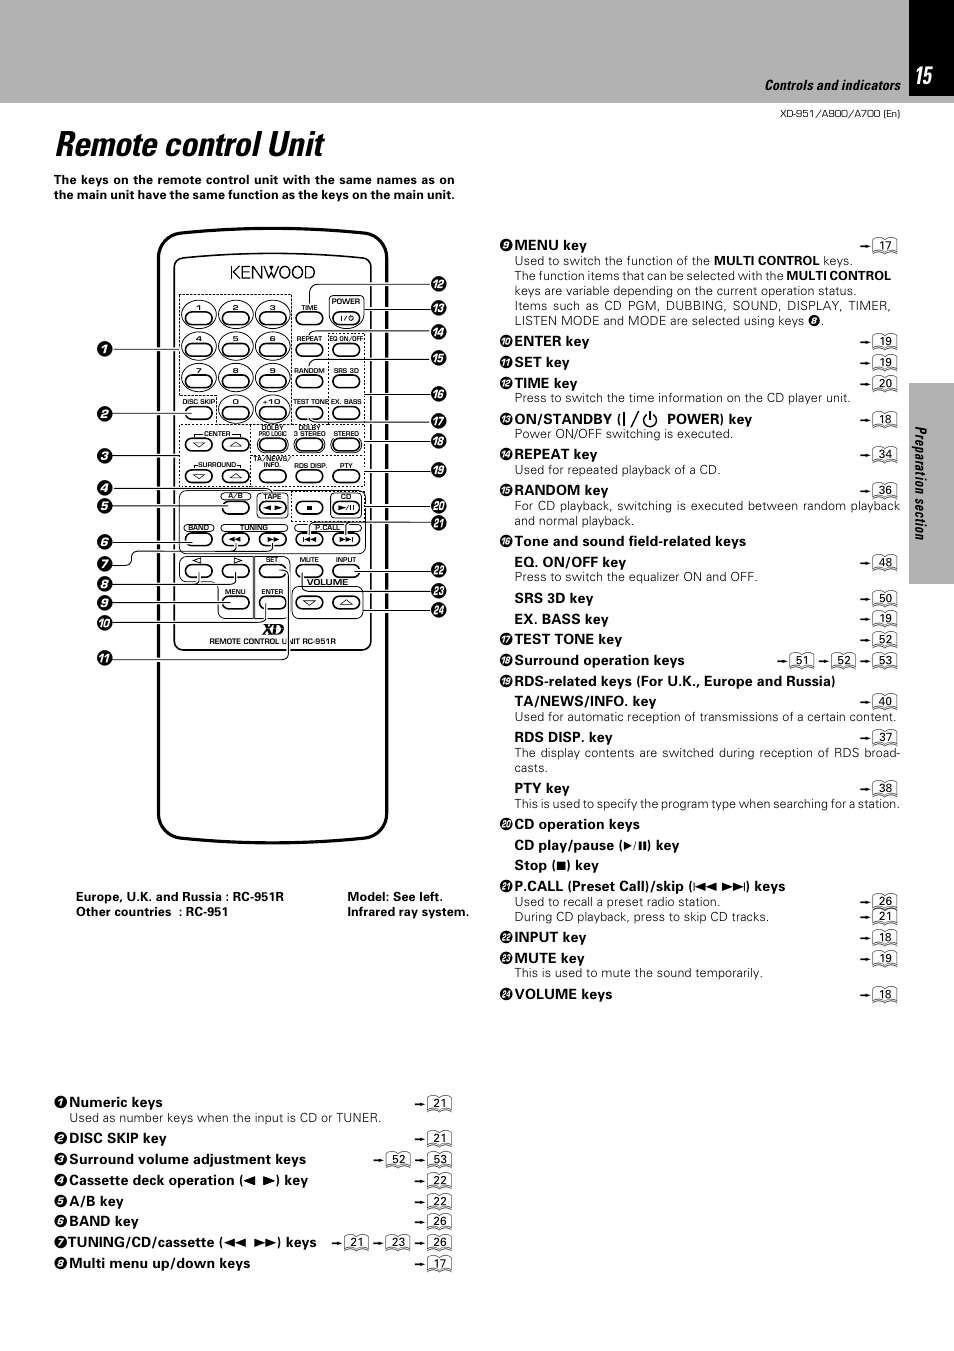 Remote control unit | Kenwood XD-A900 User Manual | Page 15 / 68 | Original  mode